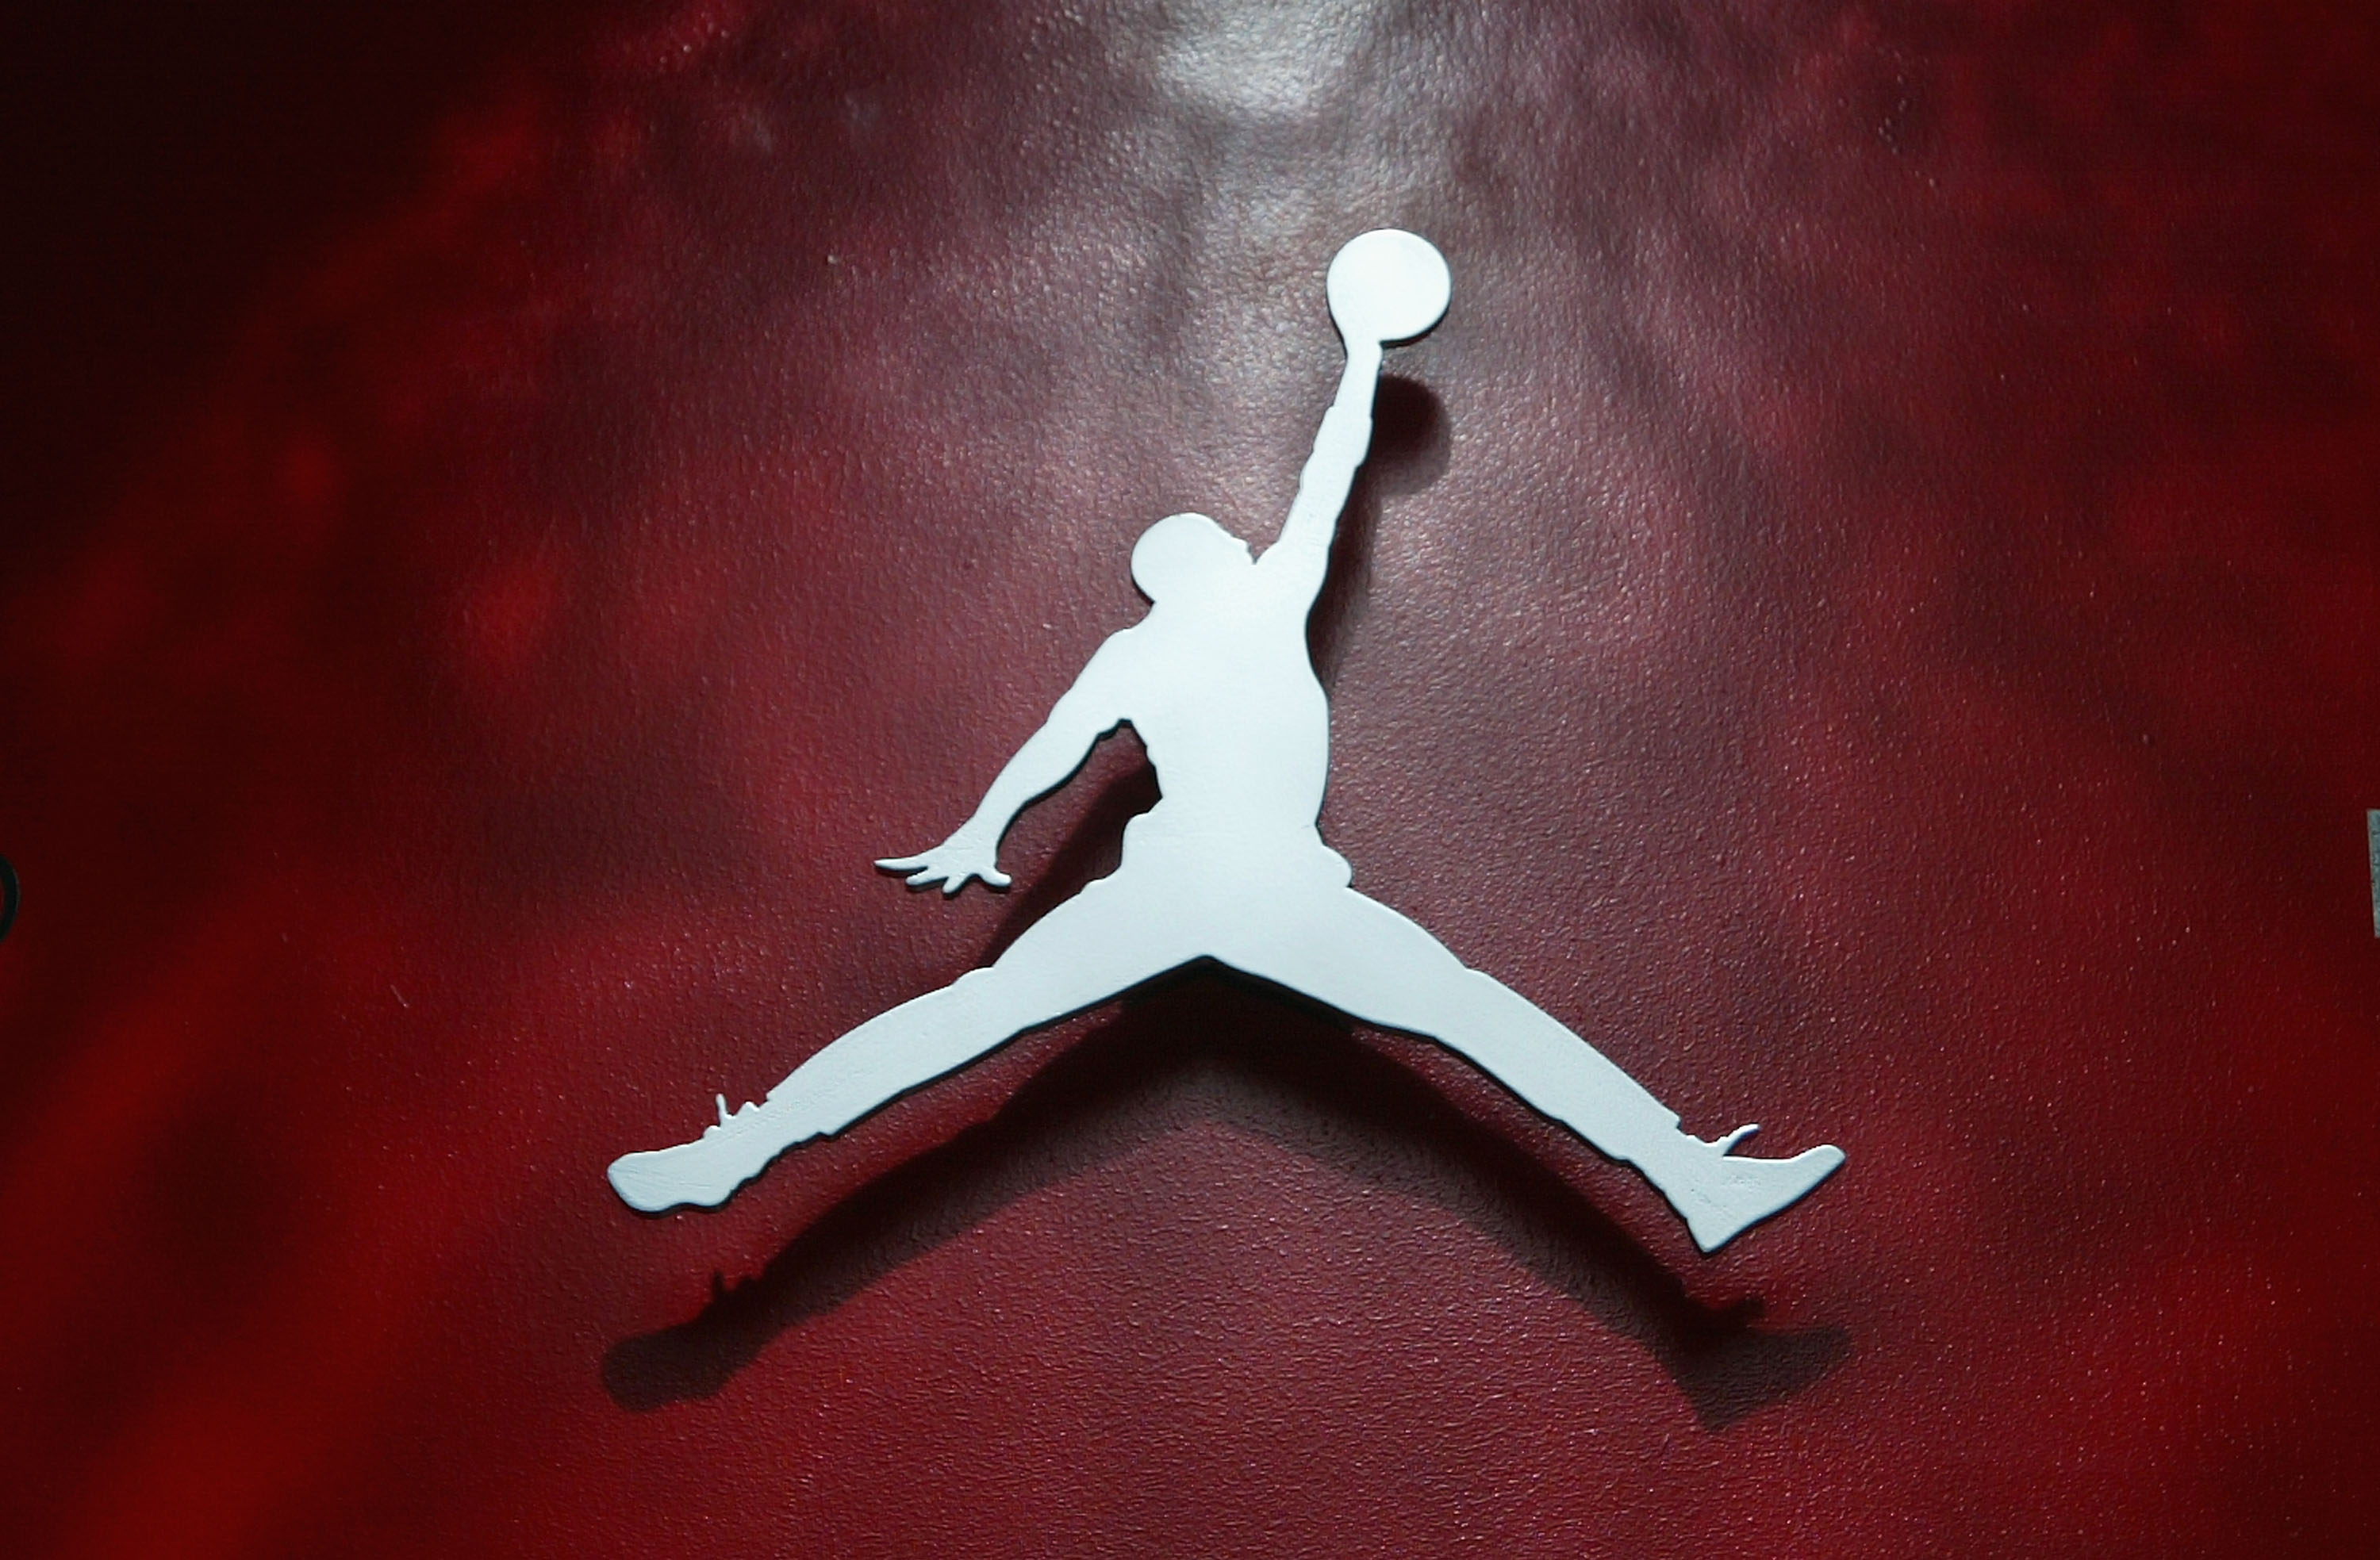 Air Jordan 4 “Frozen Moments” Coming Soon: First Look